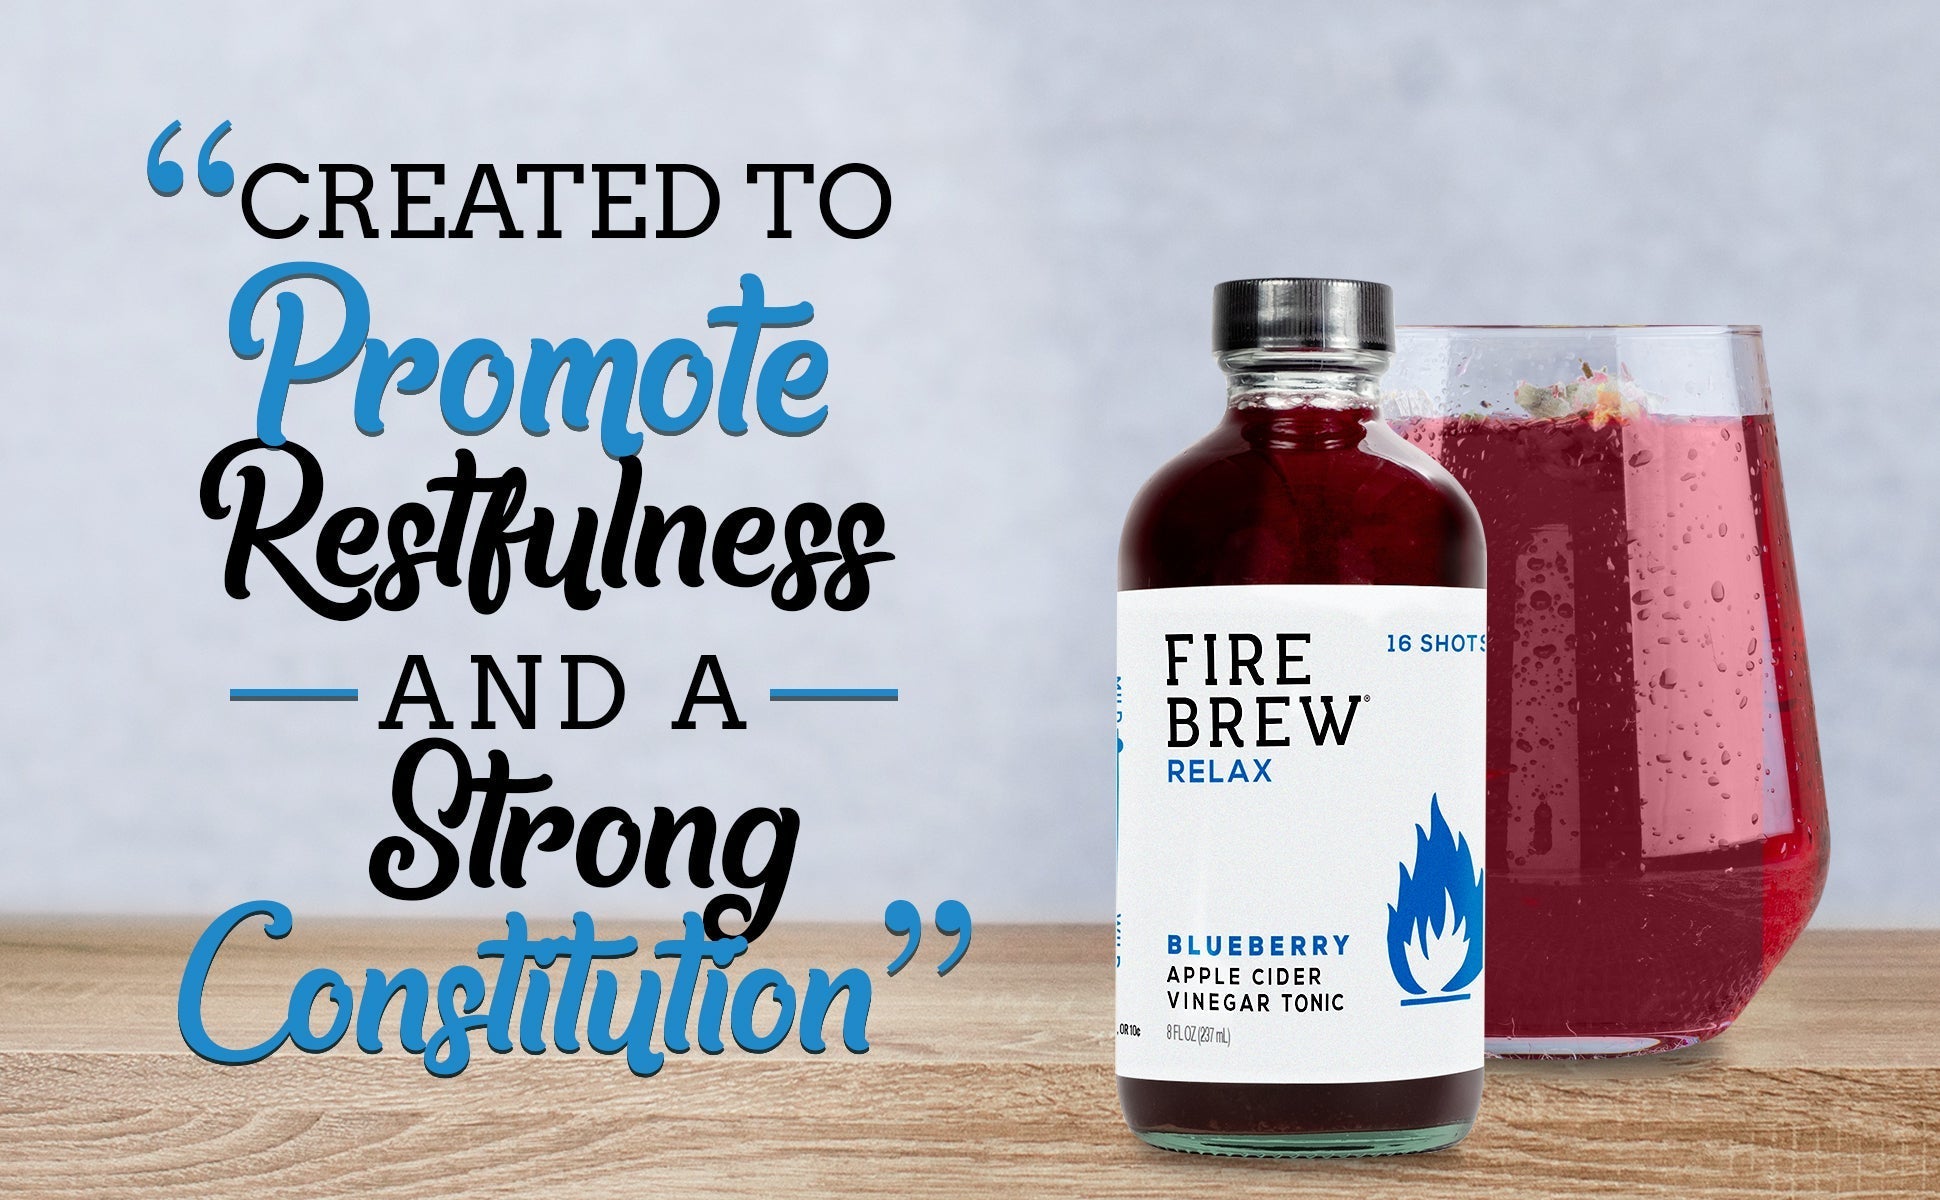 Fire Brew - RELAX Blueberry Apple Cider Vinegar Tonic (Non-Spicy Fire Cider Recipe) - Tree Spirit Wellness